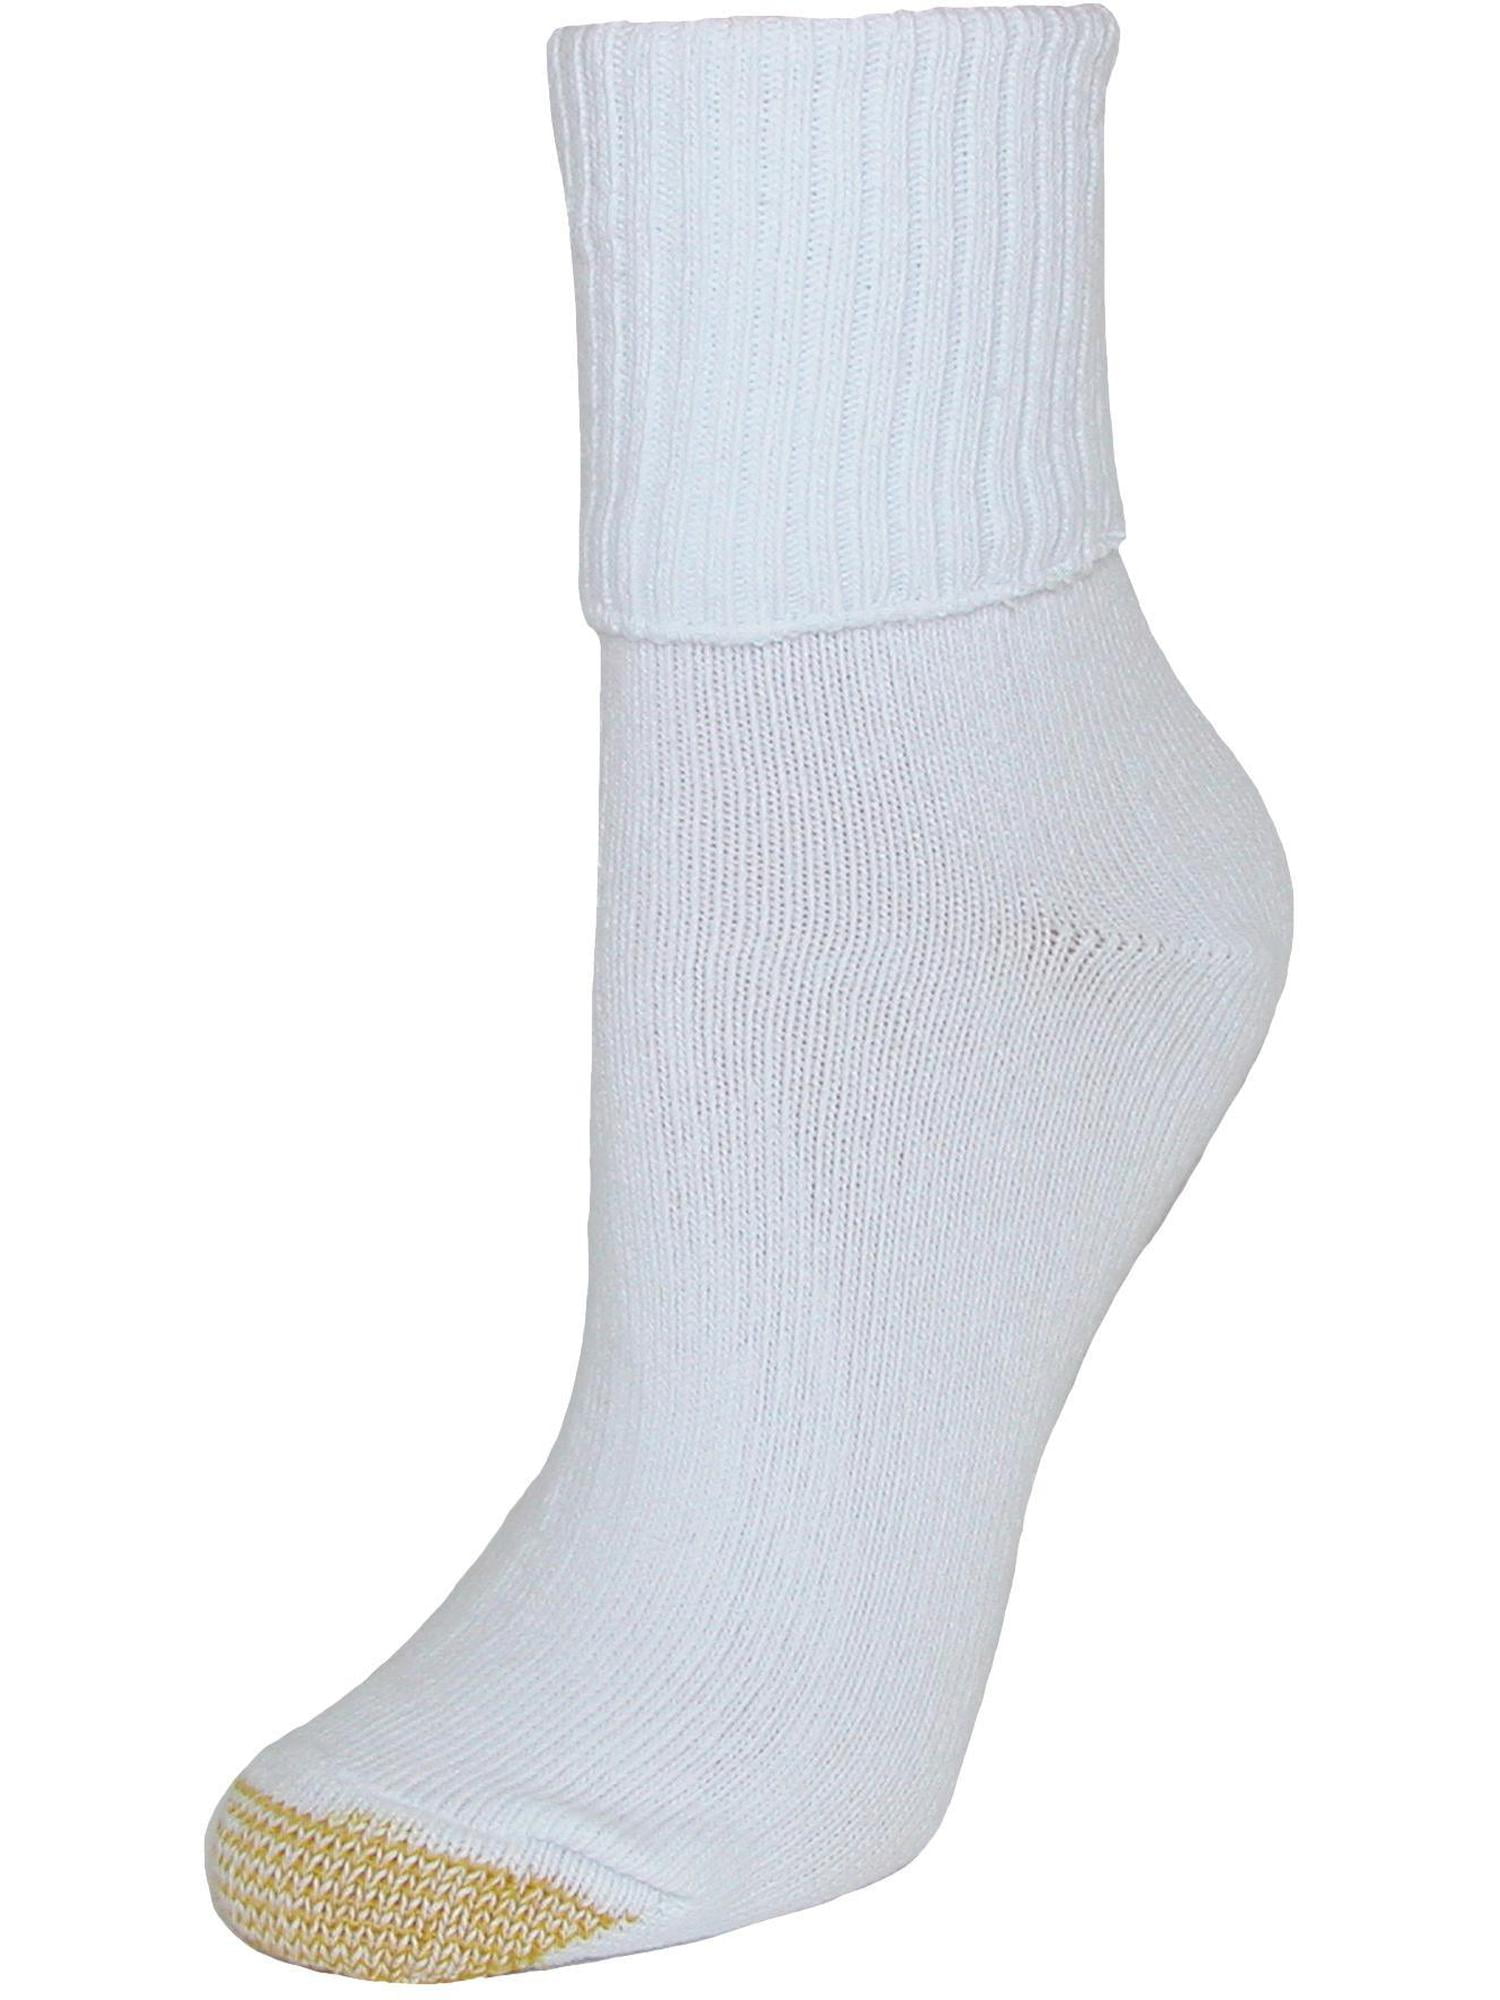 Gold Toe Turn Cuff Bermuda Socks (3 Pair Pack) (Women's) - Walmart.com